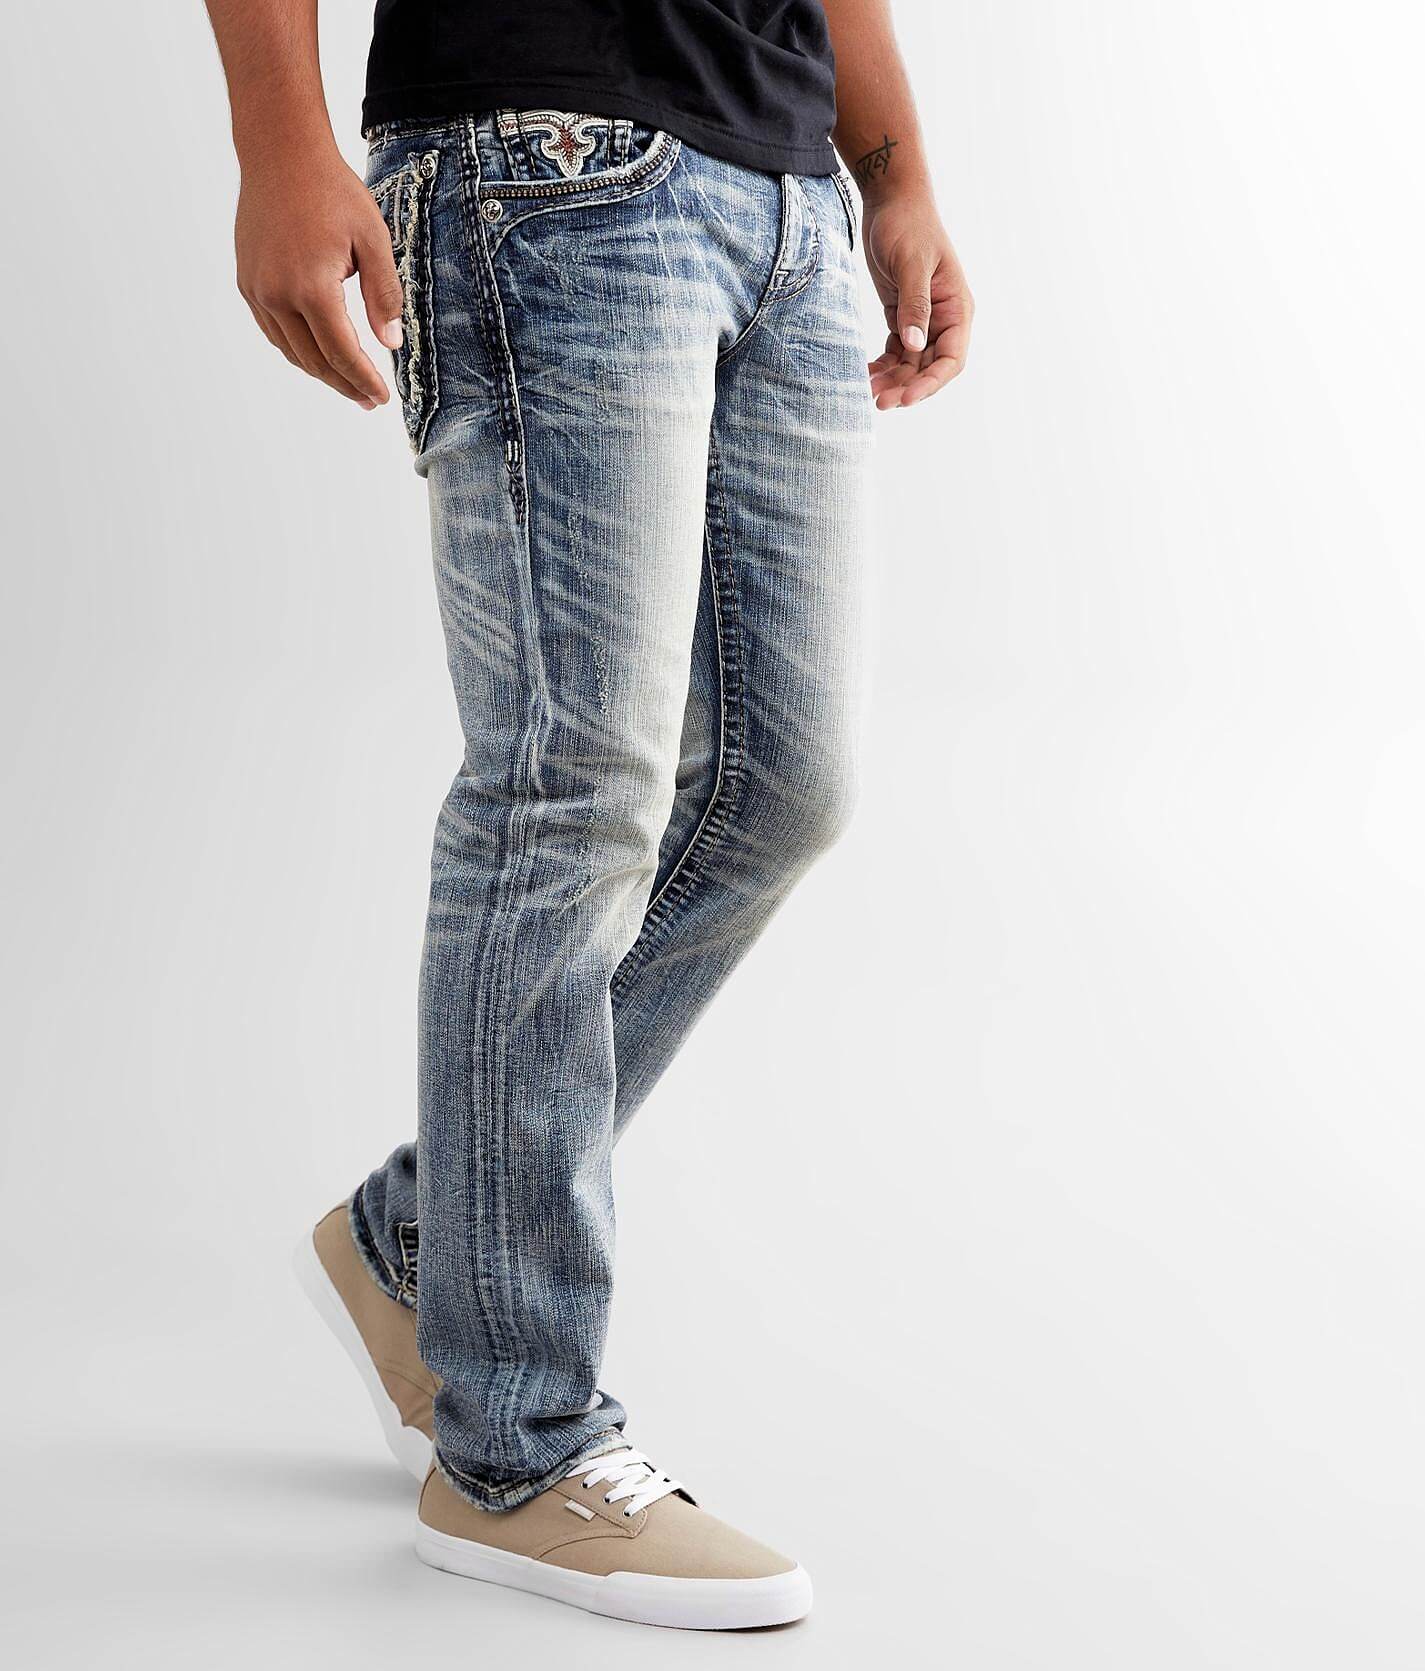 rock revival stretch jeans